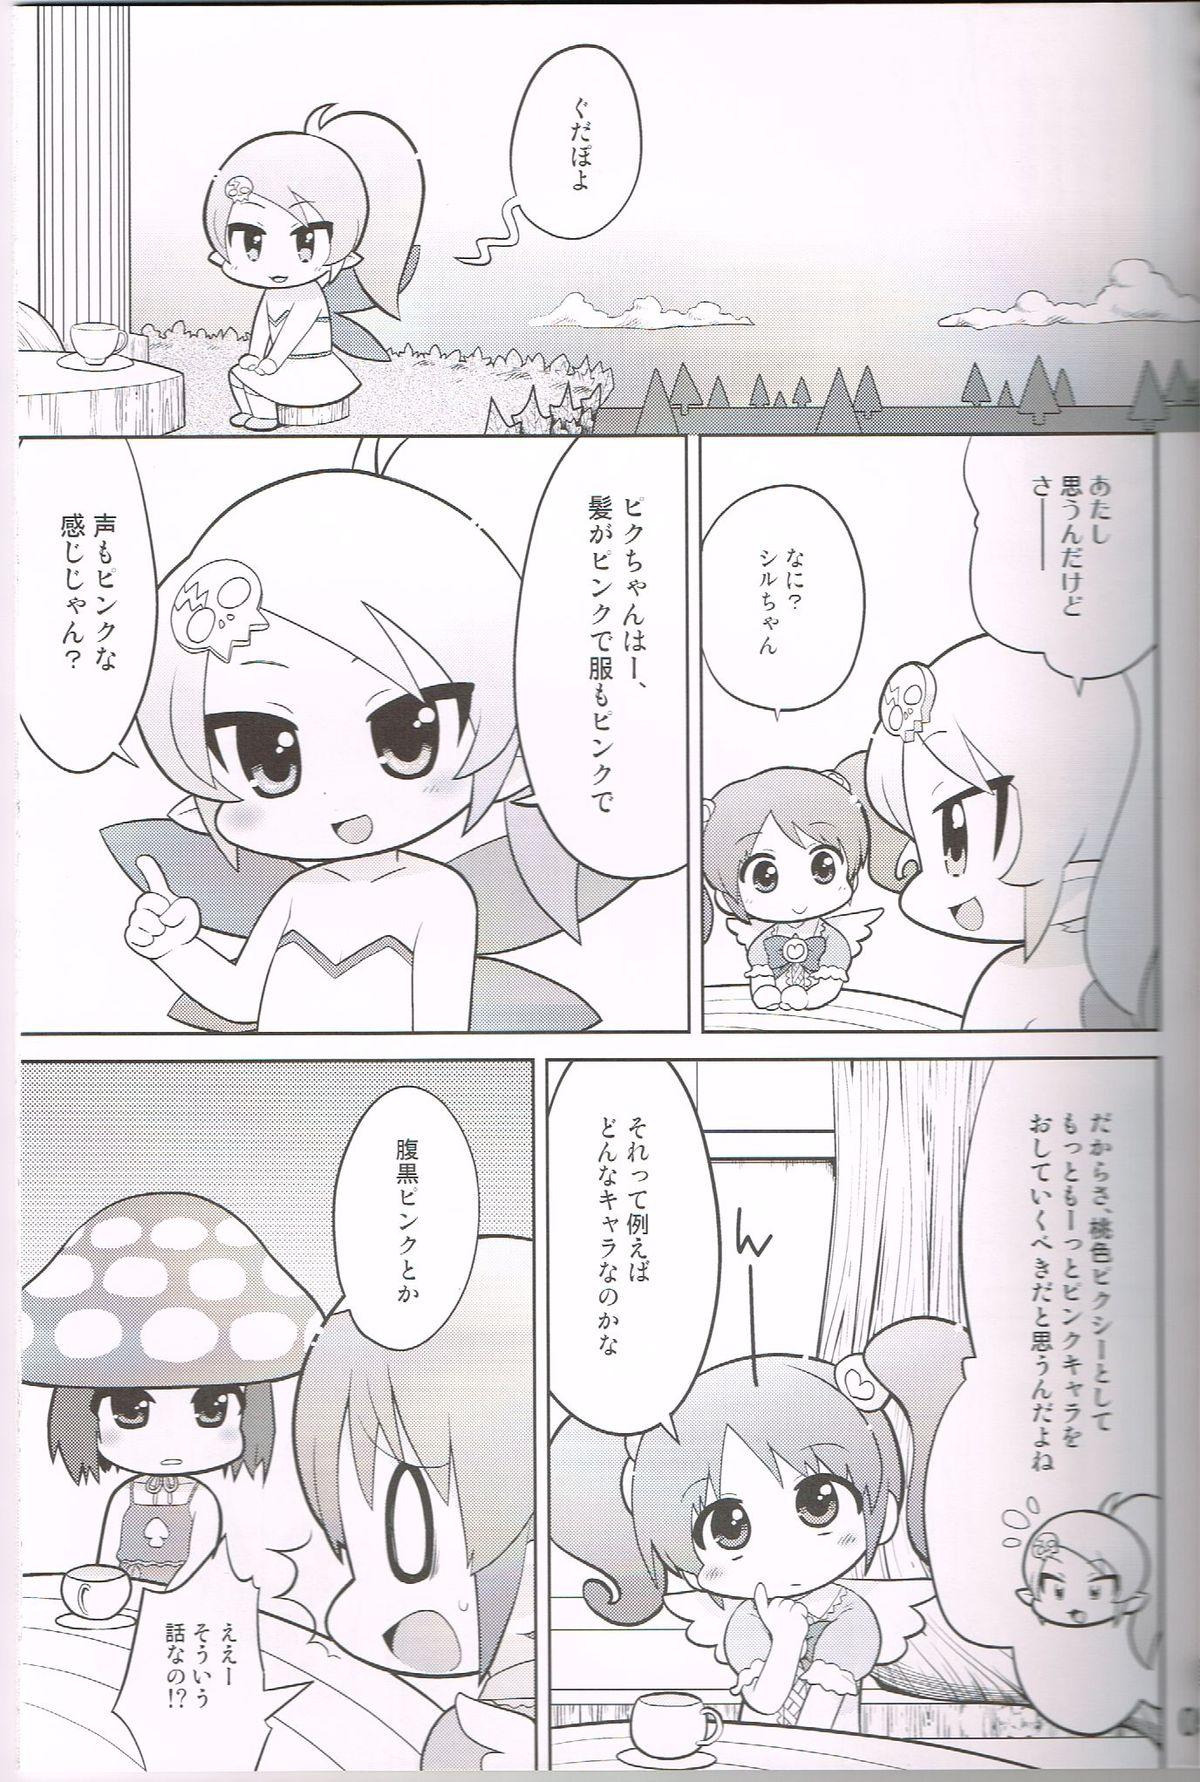 Nerd Momoirotoiki - Gdgd fairies Bulge - Page 4